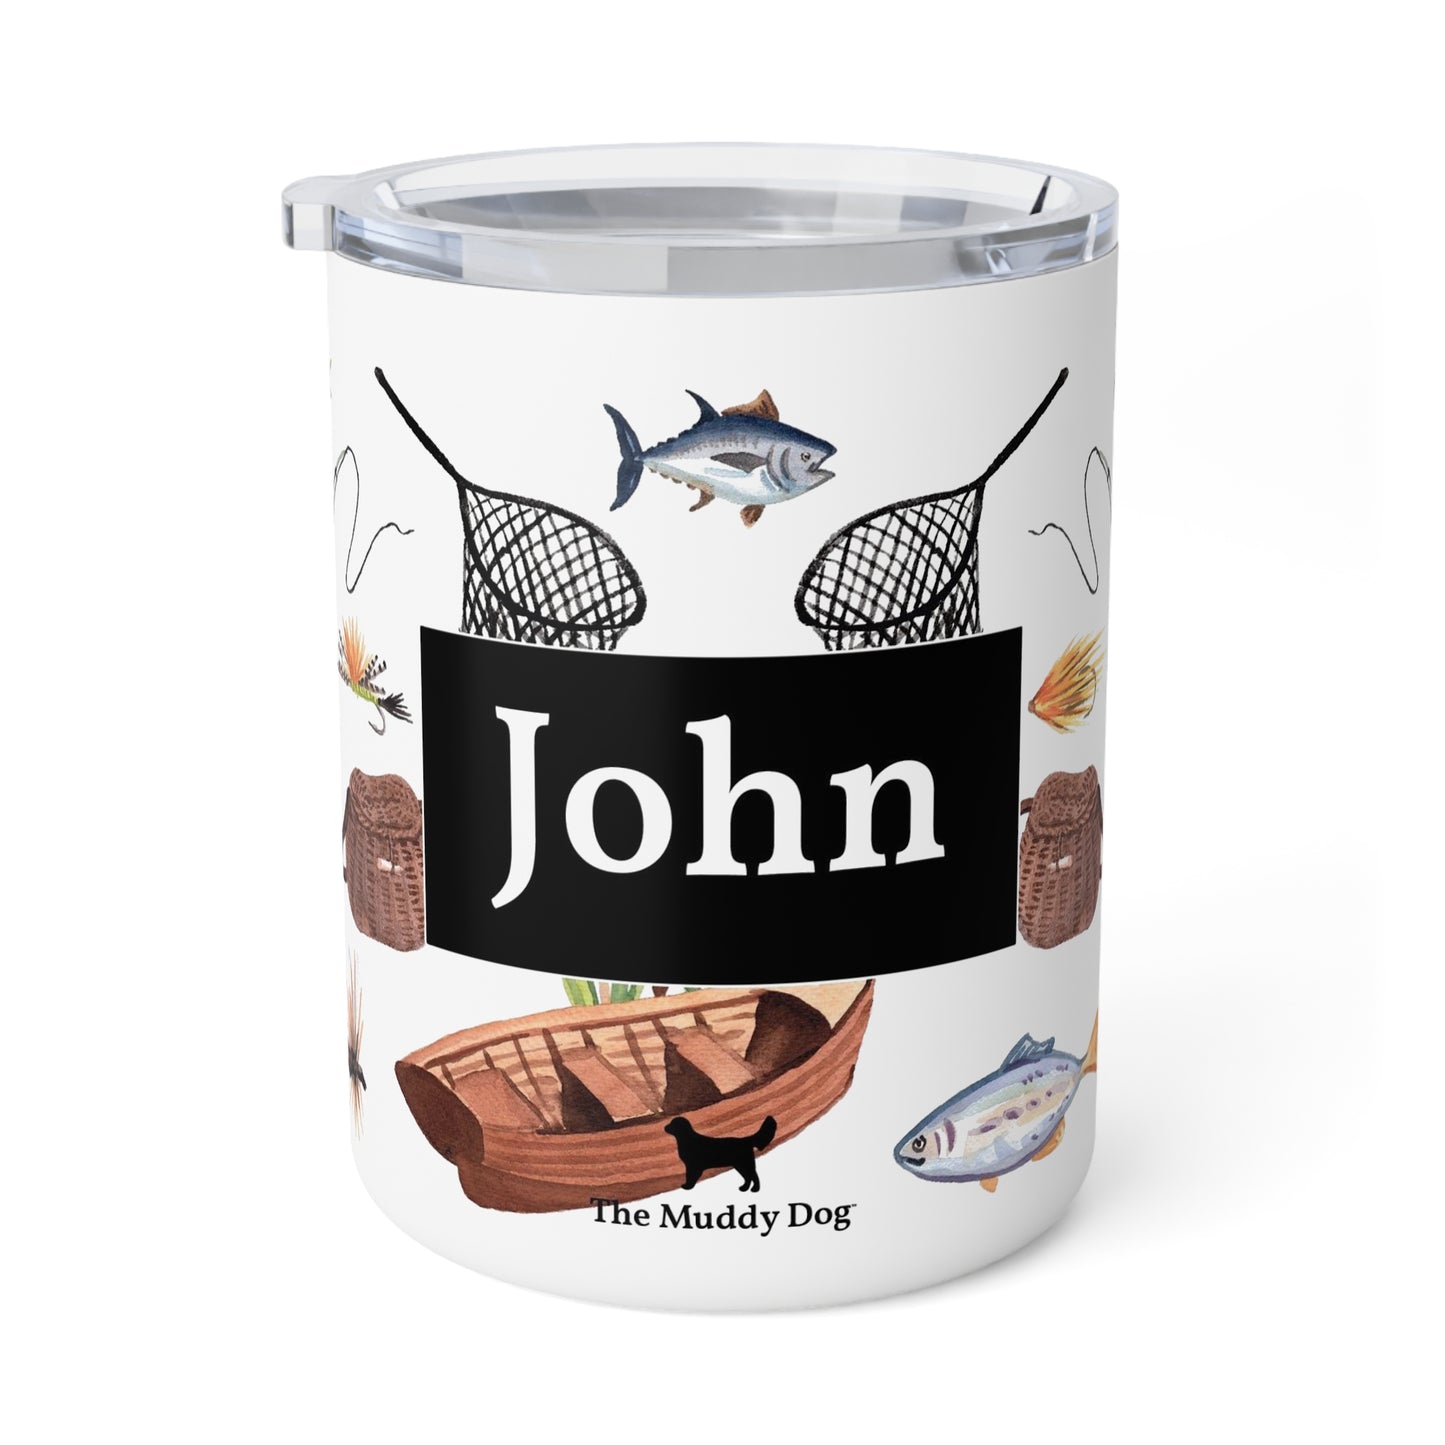 Gone Fishing Insulated Multi Mug With Optional Personalization